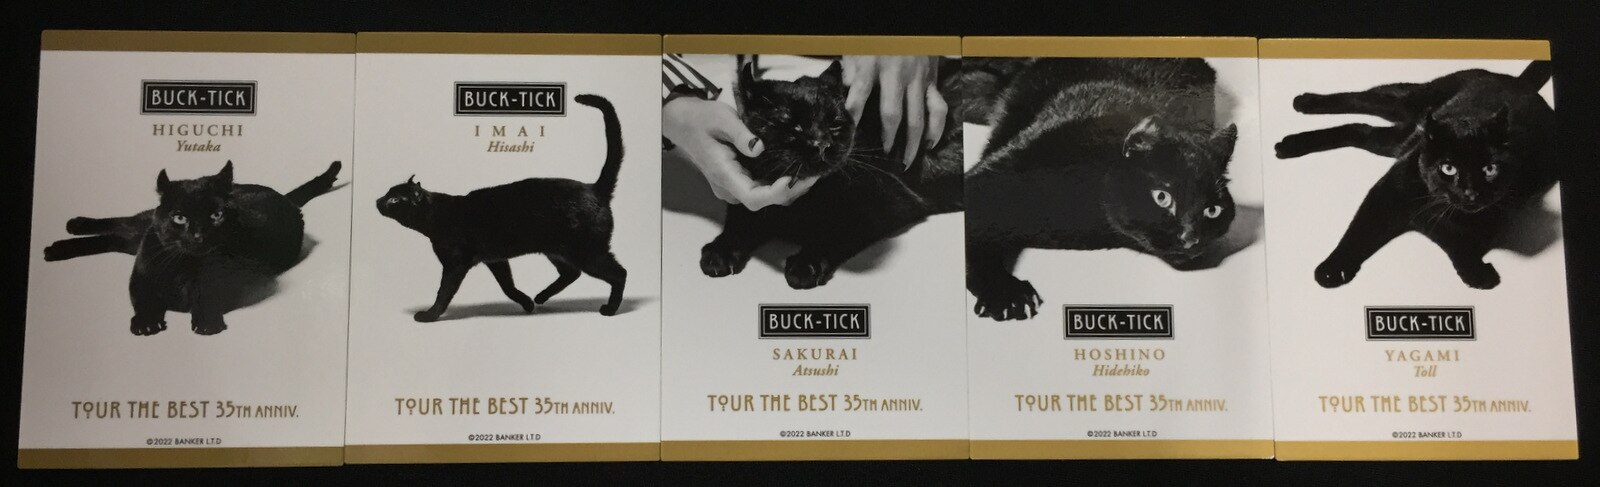 BUCK-TICK 2022 TOUR THE BEST 35th anniv. ランダムトレカ メンバー5